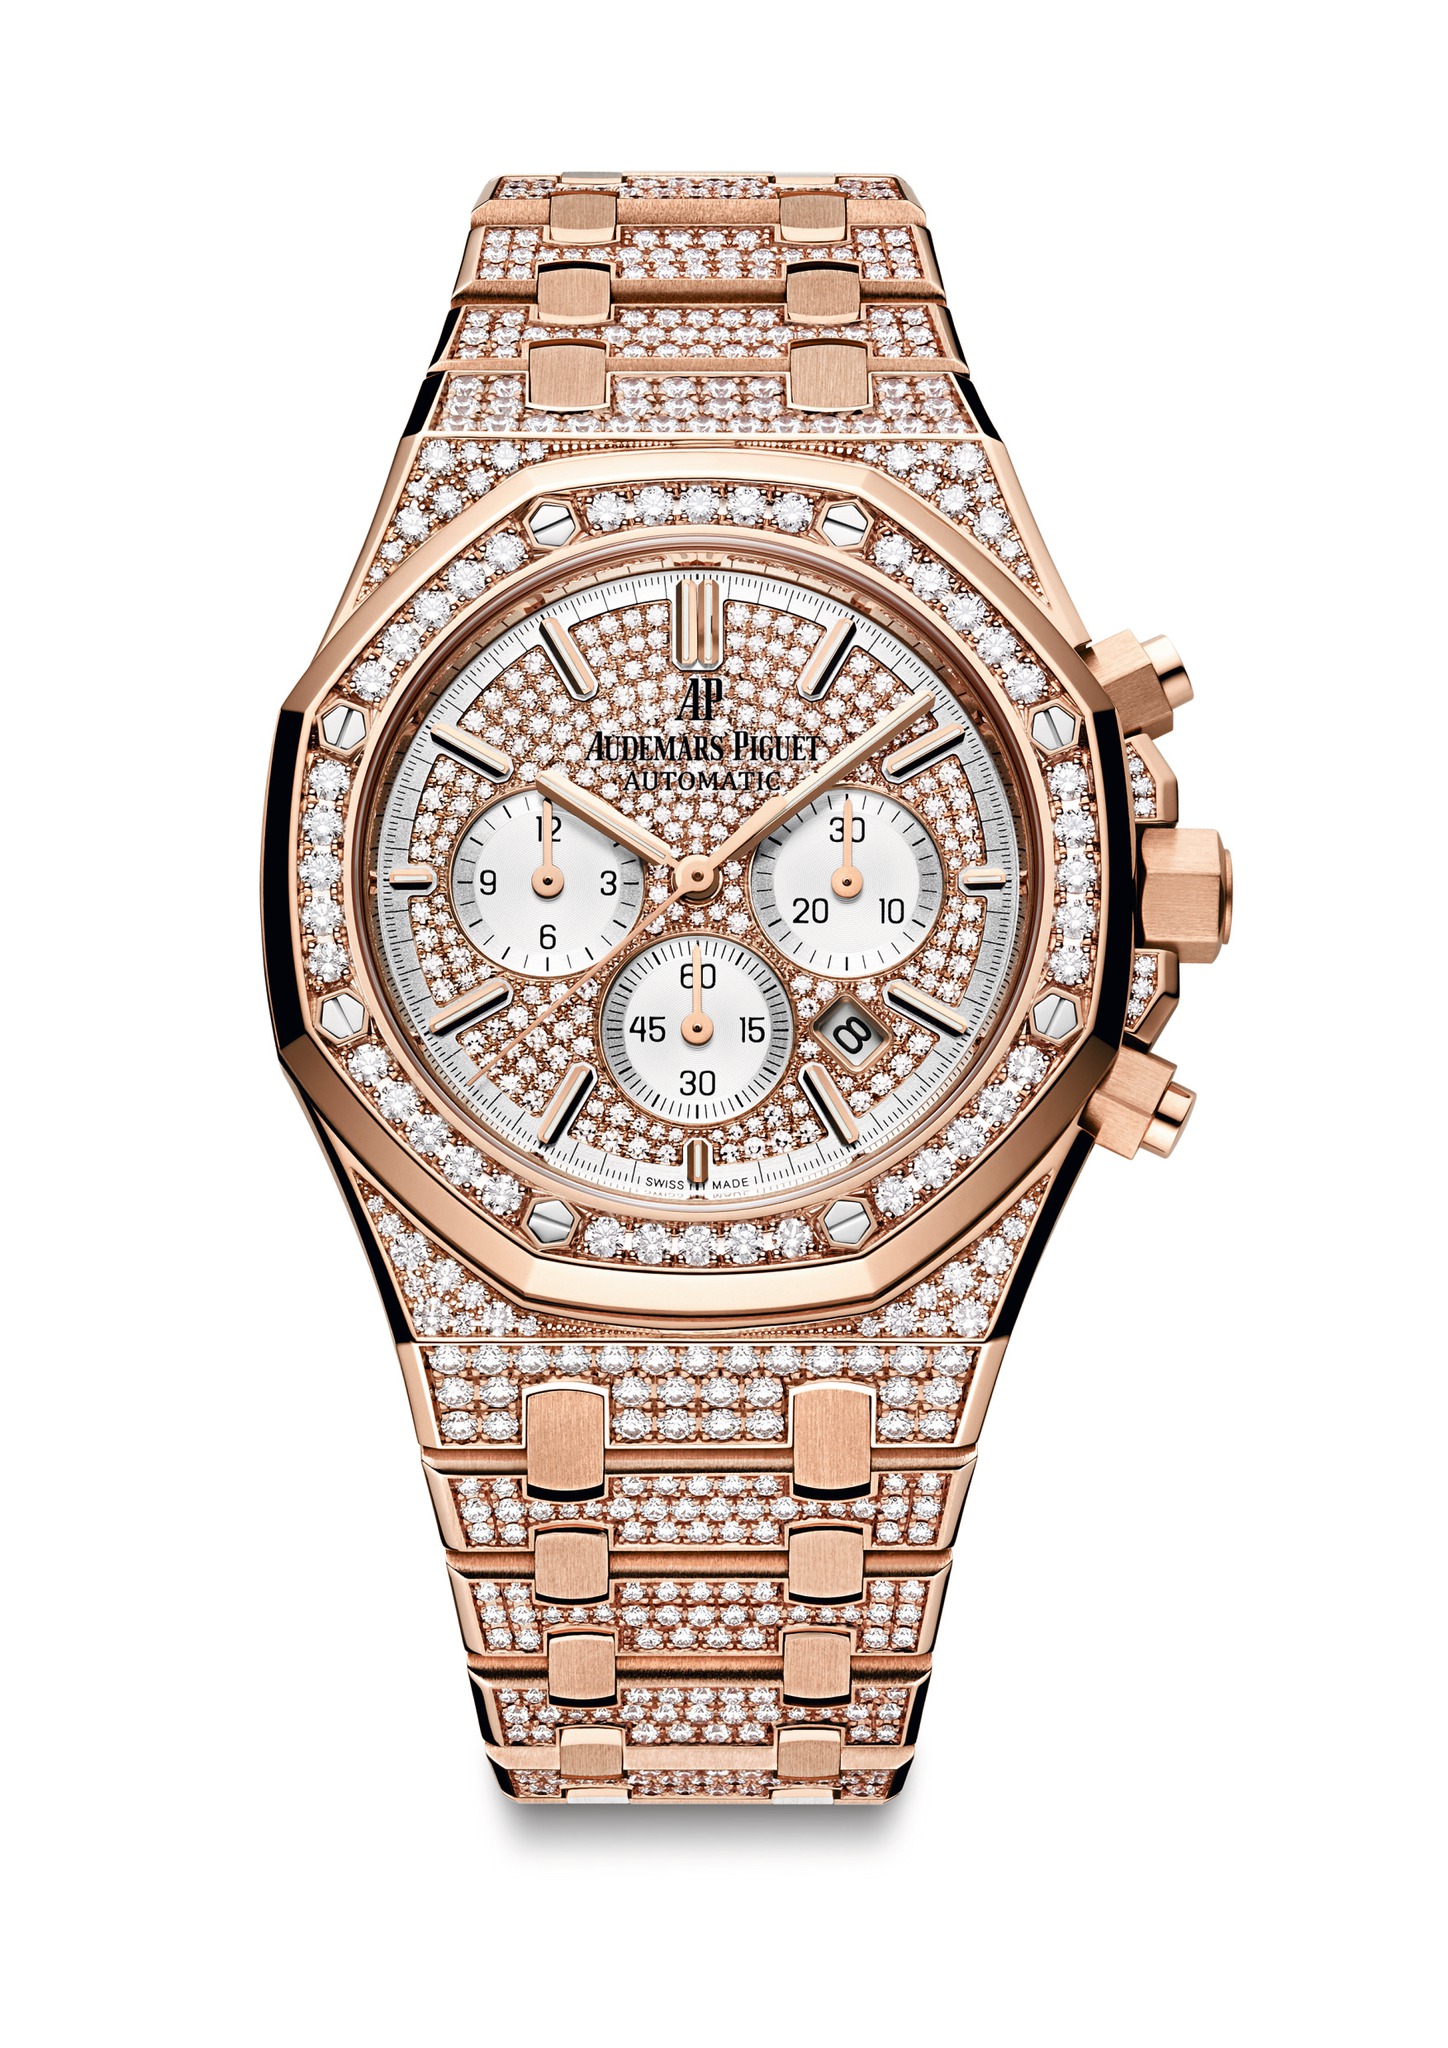 Audemars Piguet New Royal Oak Lady Chronograph Full Pavé Pink Gold watch REF: 26322OR.ZZ.1222OR.02